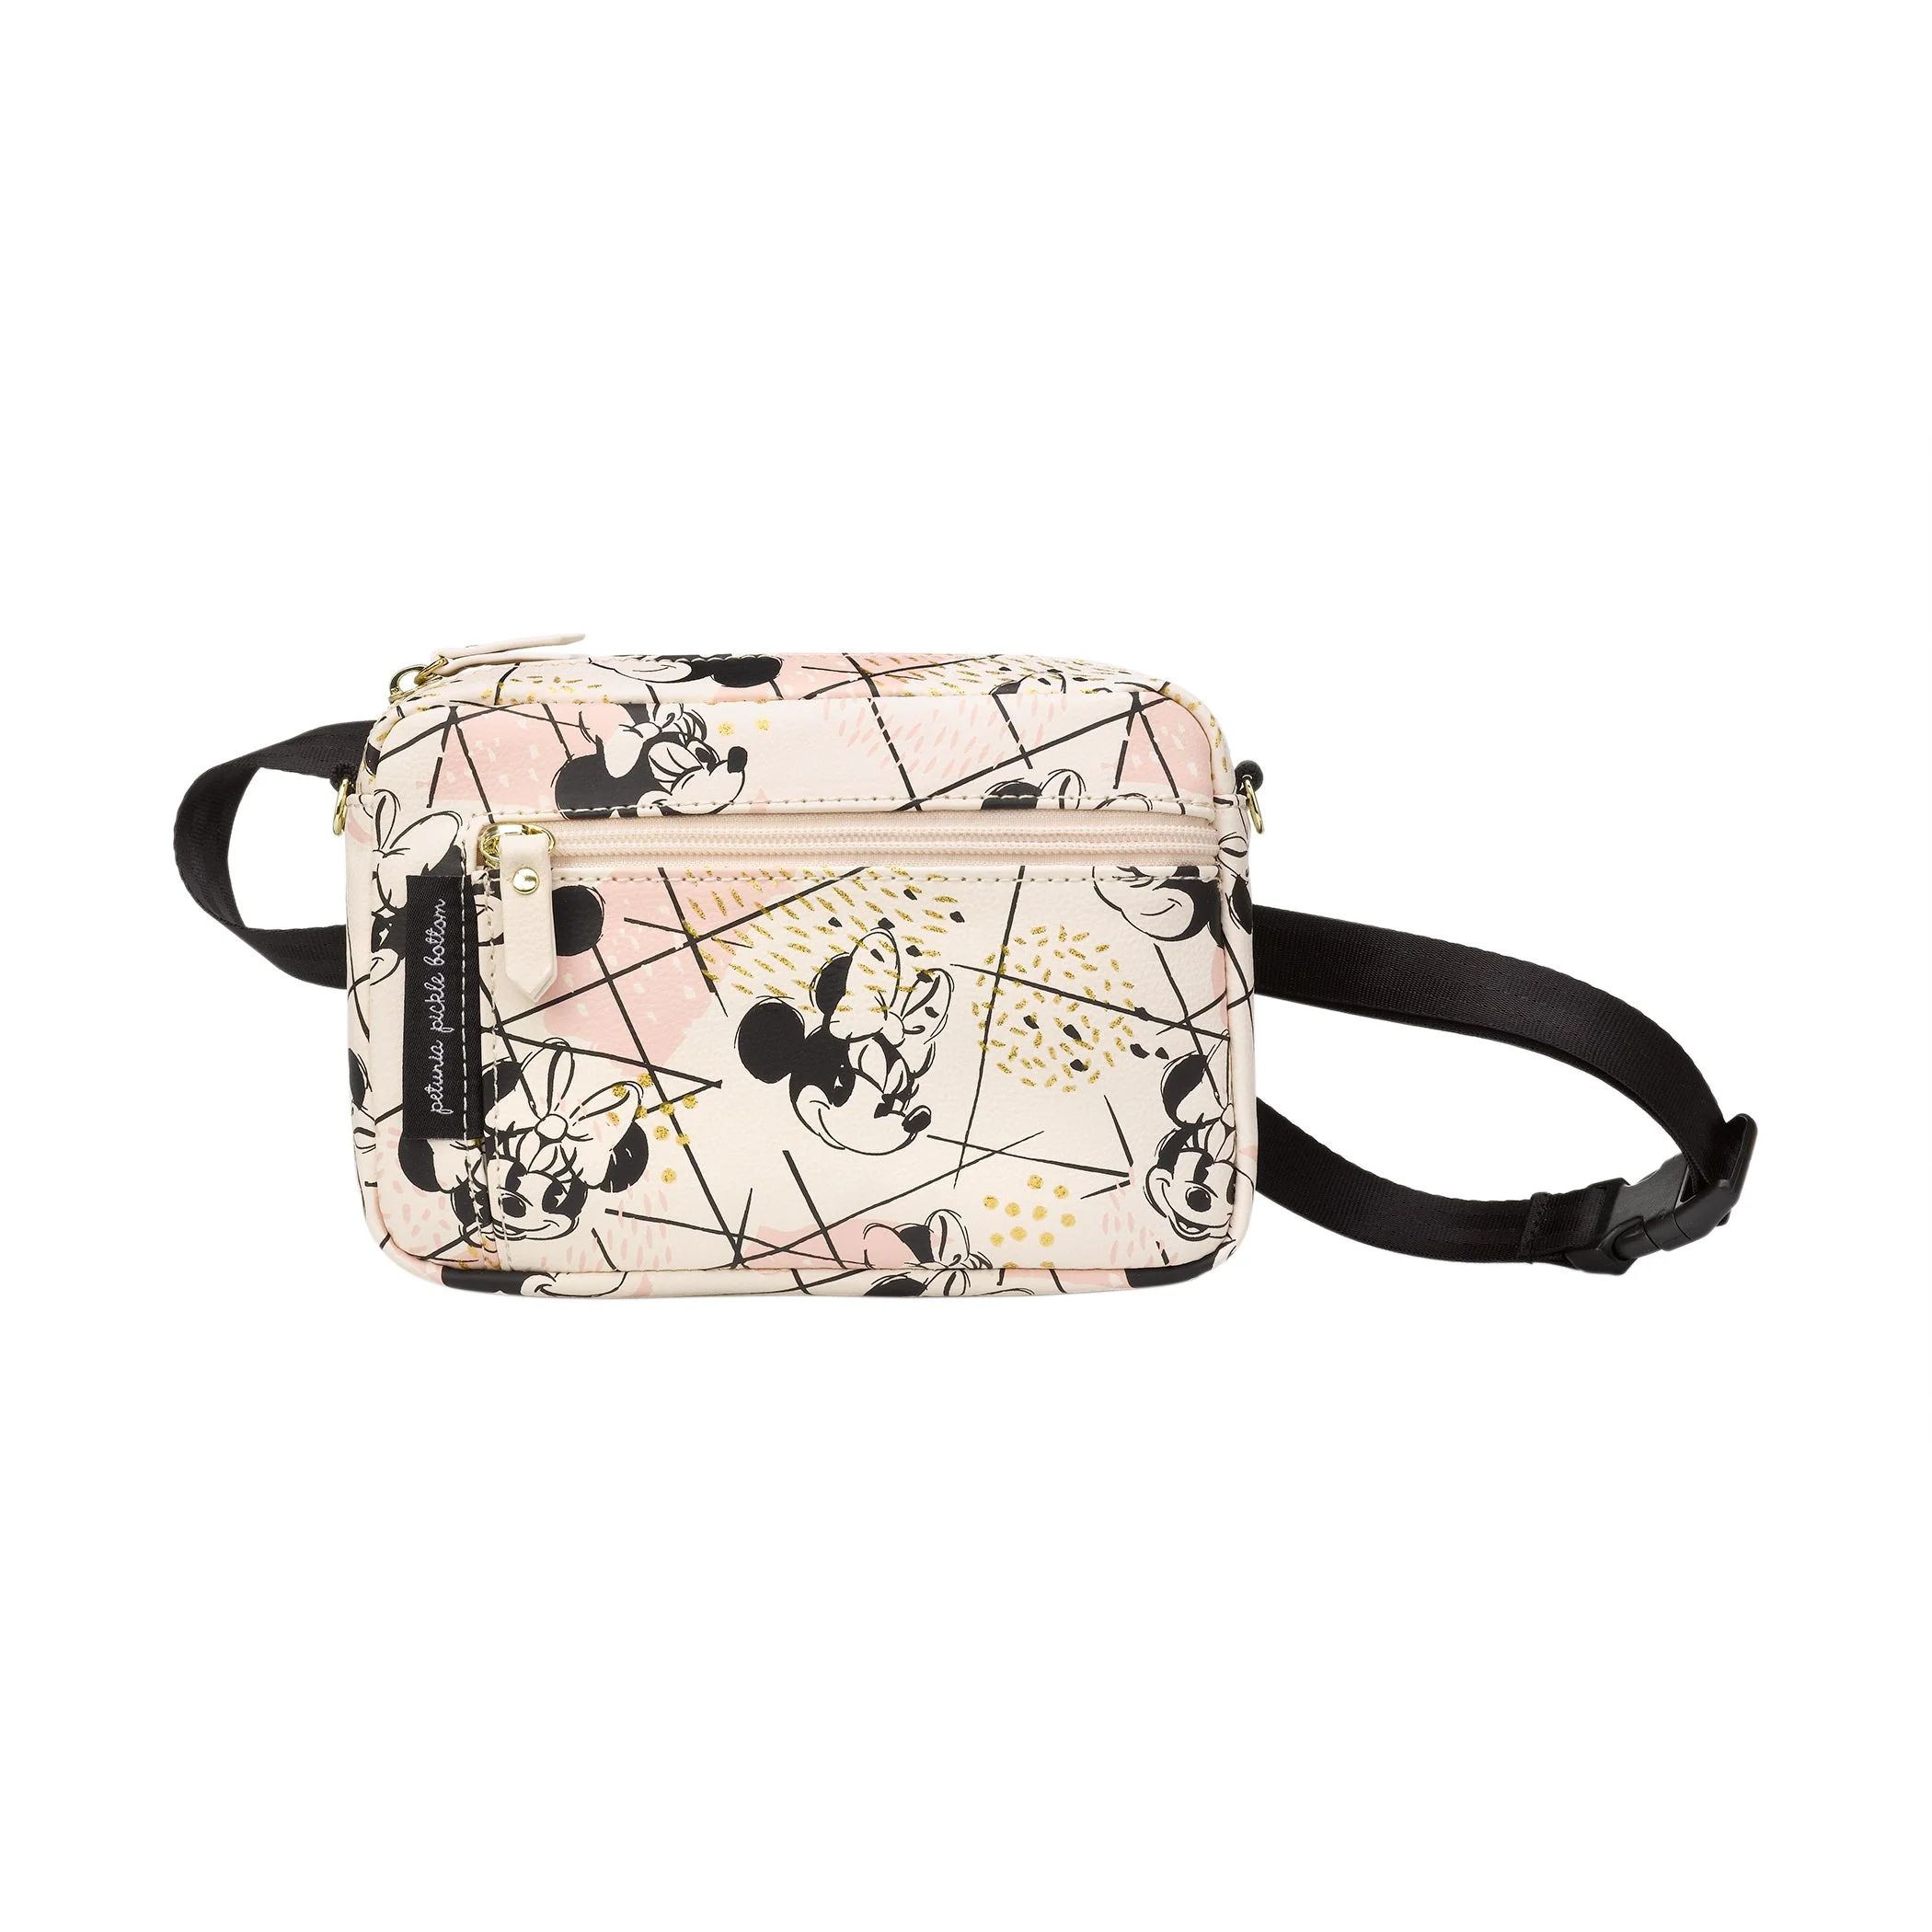 Adventurer Belt Bag in Shimmery Minnie Mouse | Petunia Pickle Bottom